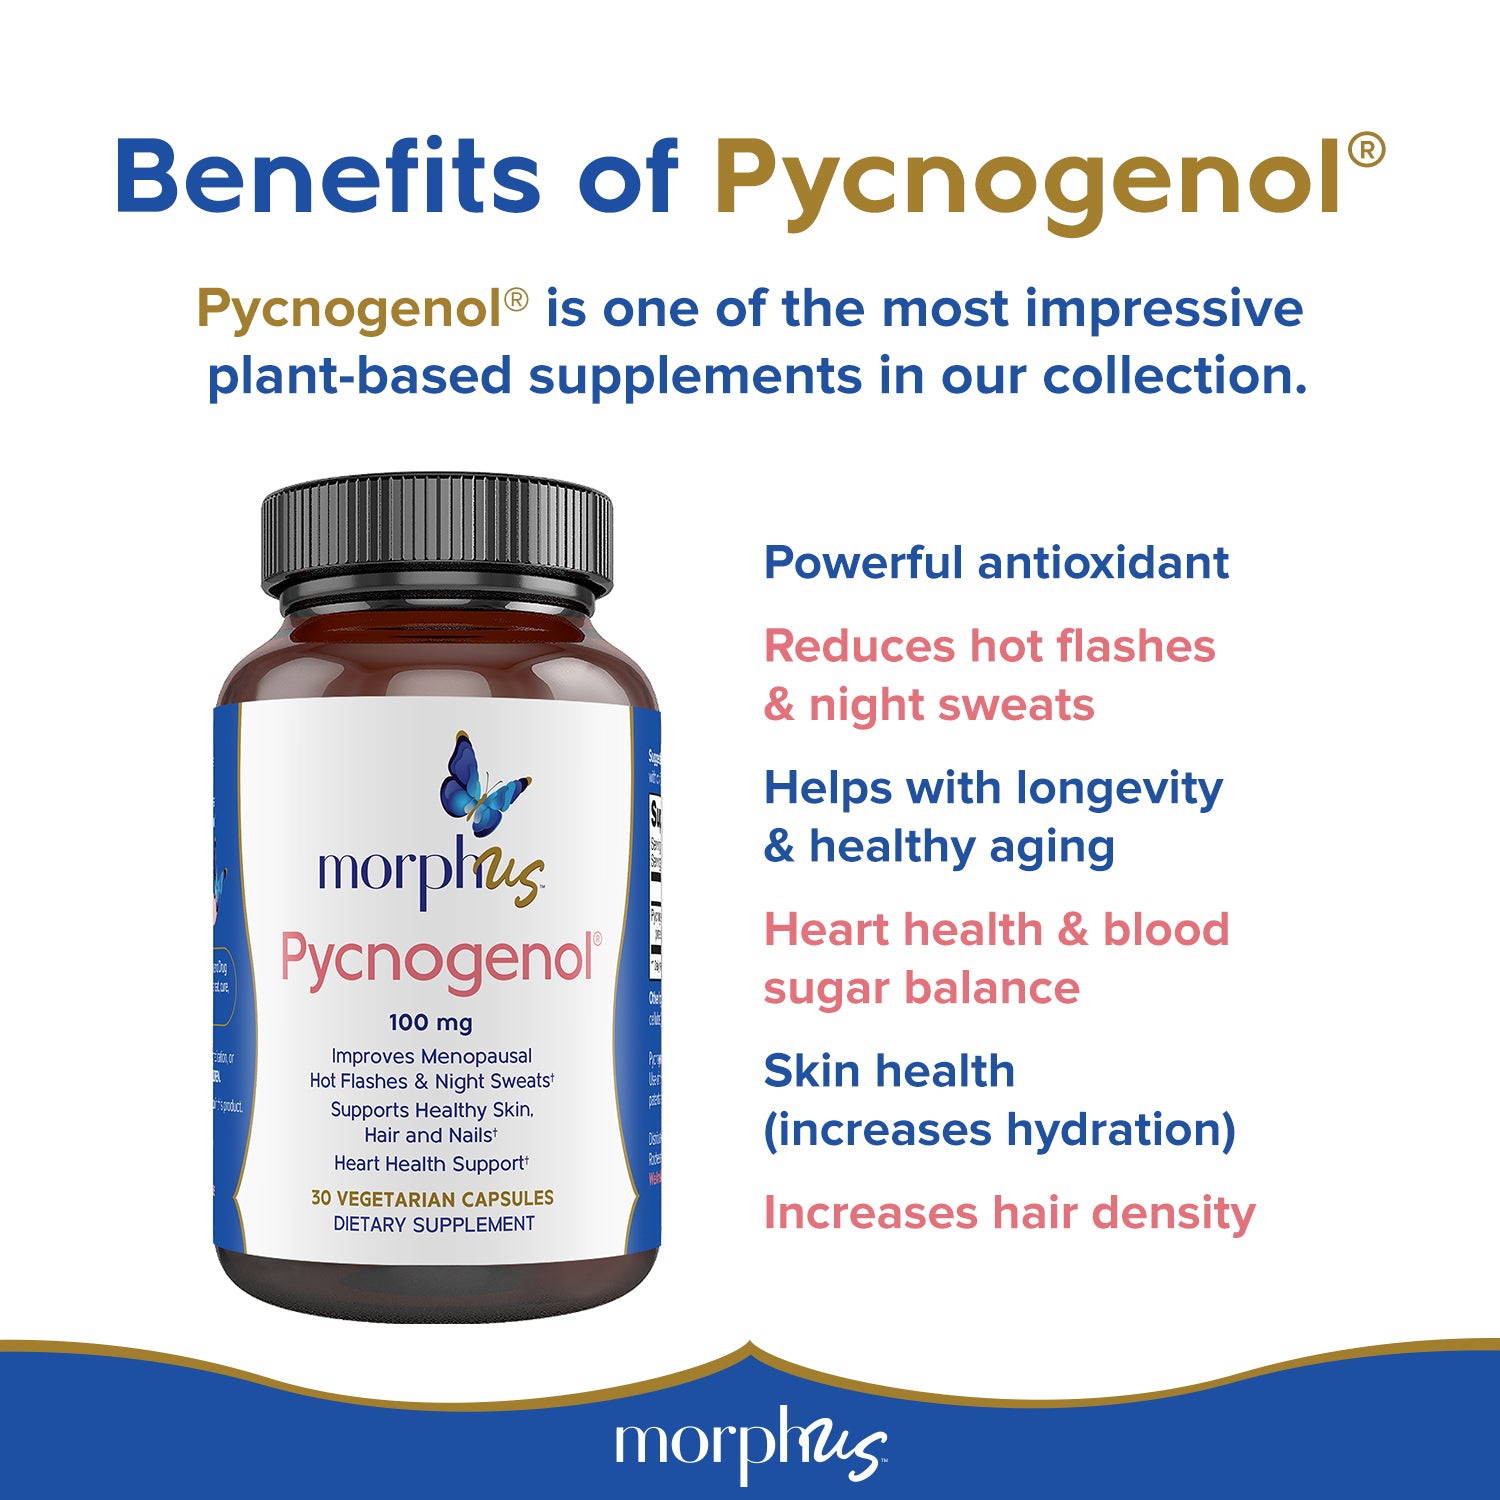 Pycnogenol benefits